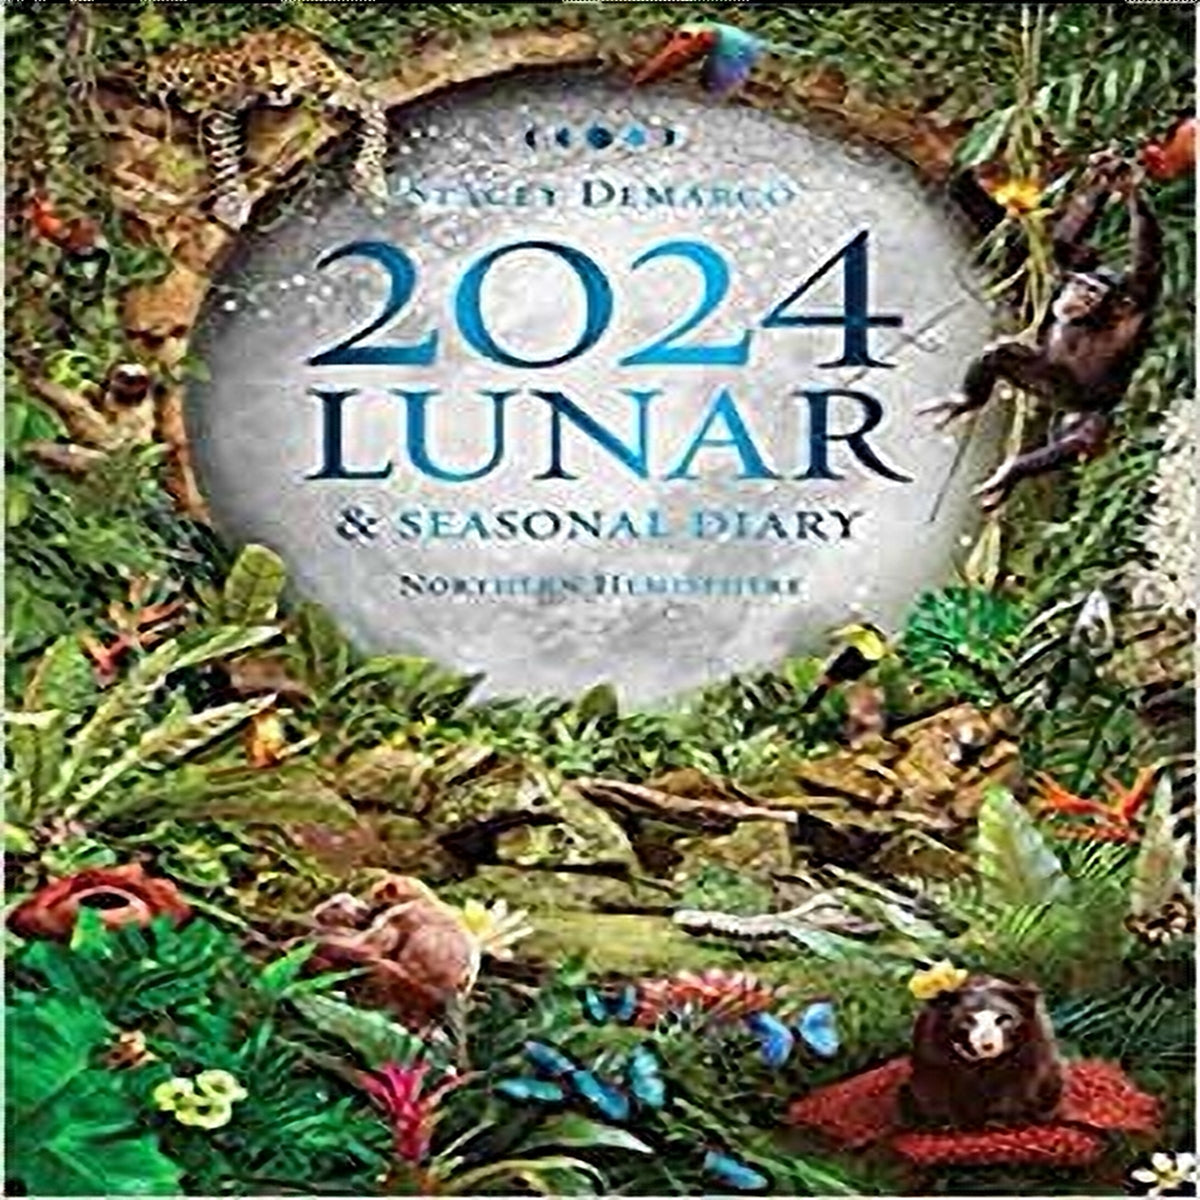 Lunar and Seasonal Diary 2024